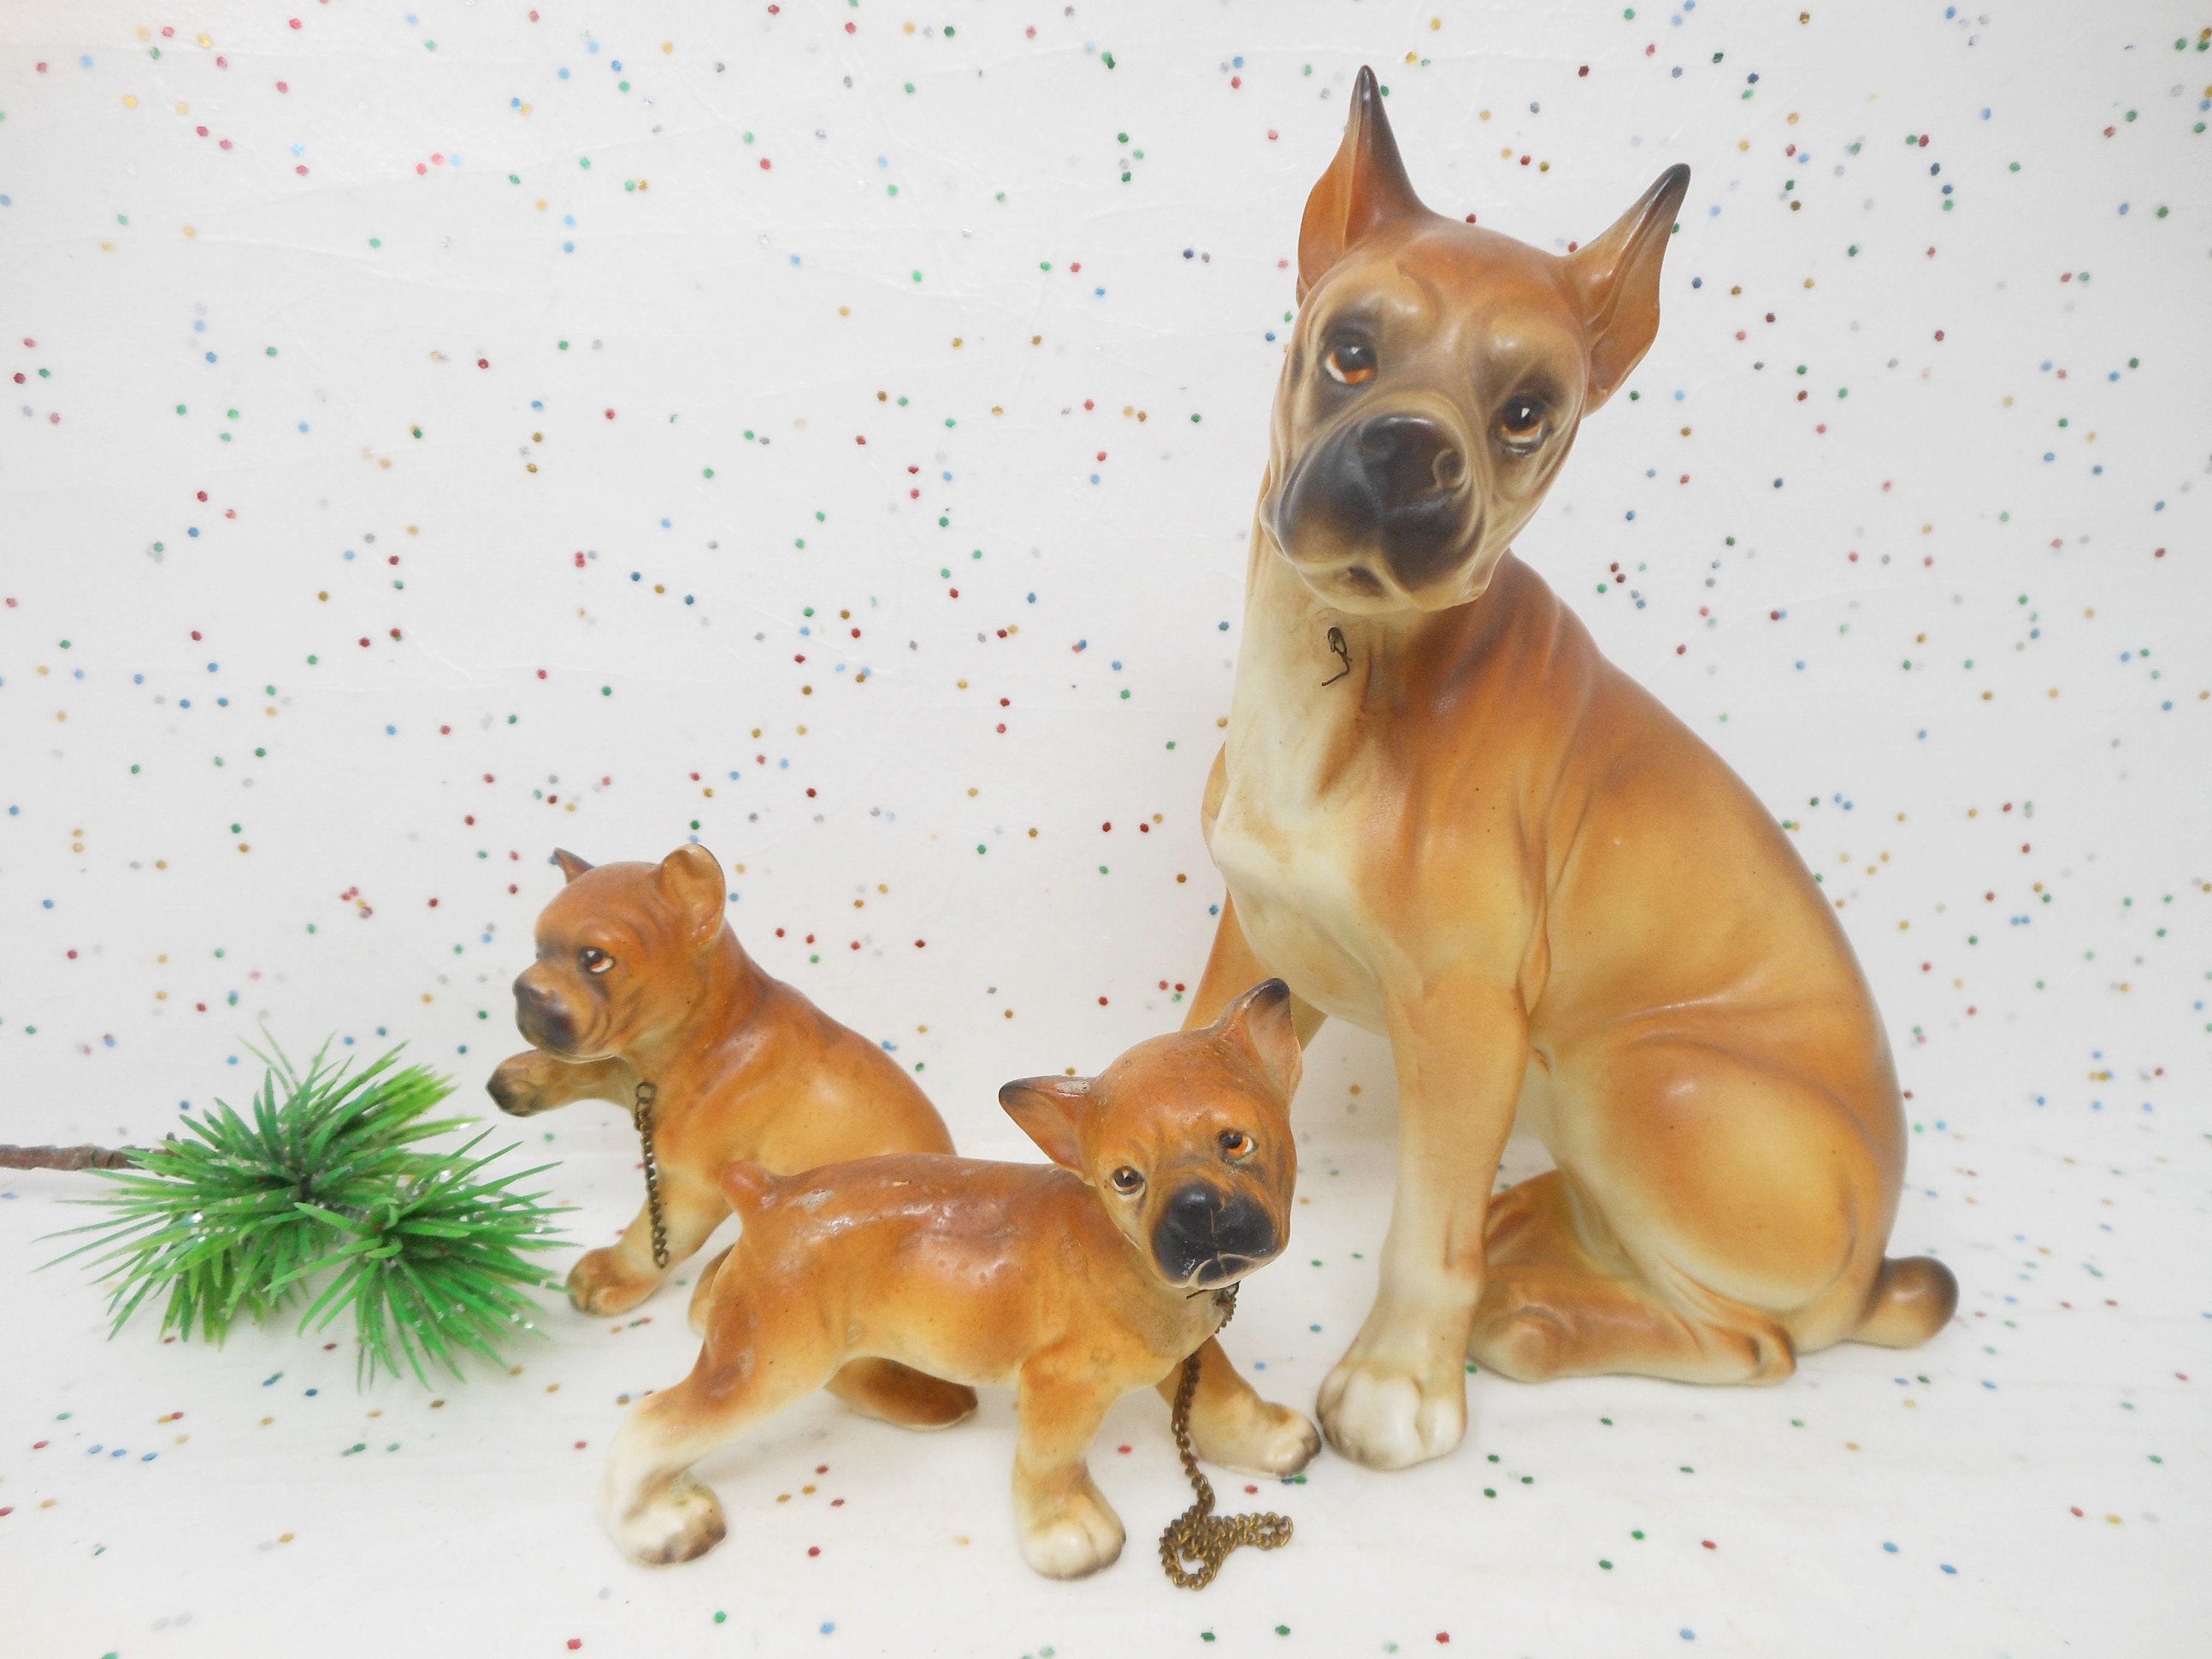 3) Miniature Boxer Dog/Puppy Figures Bone China Porcelain White & Brown  Japan